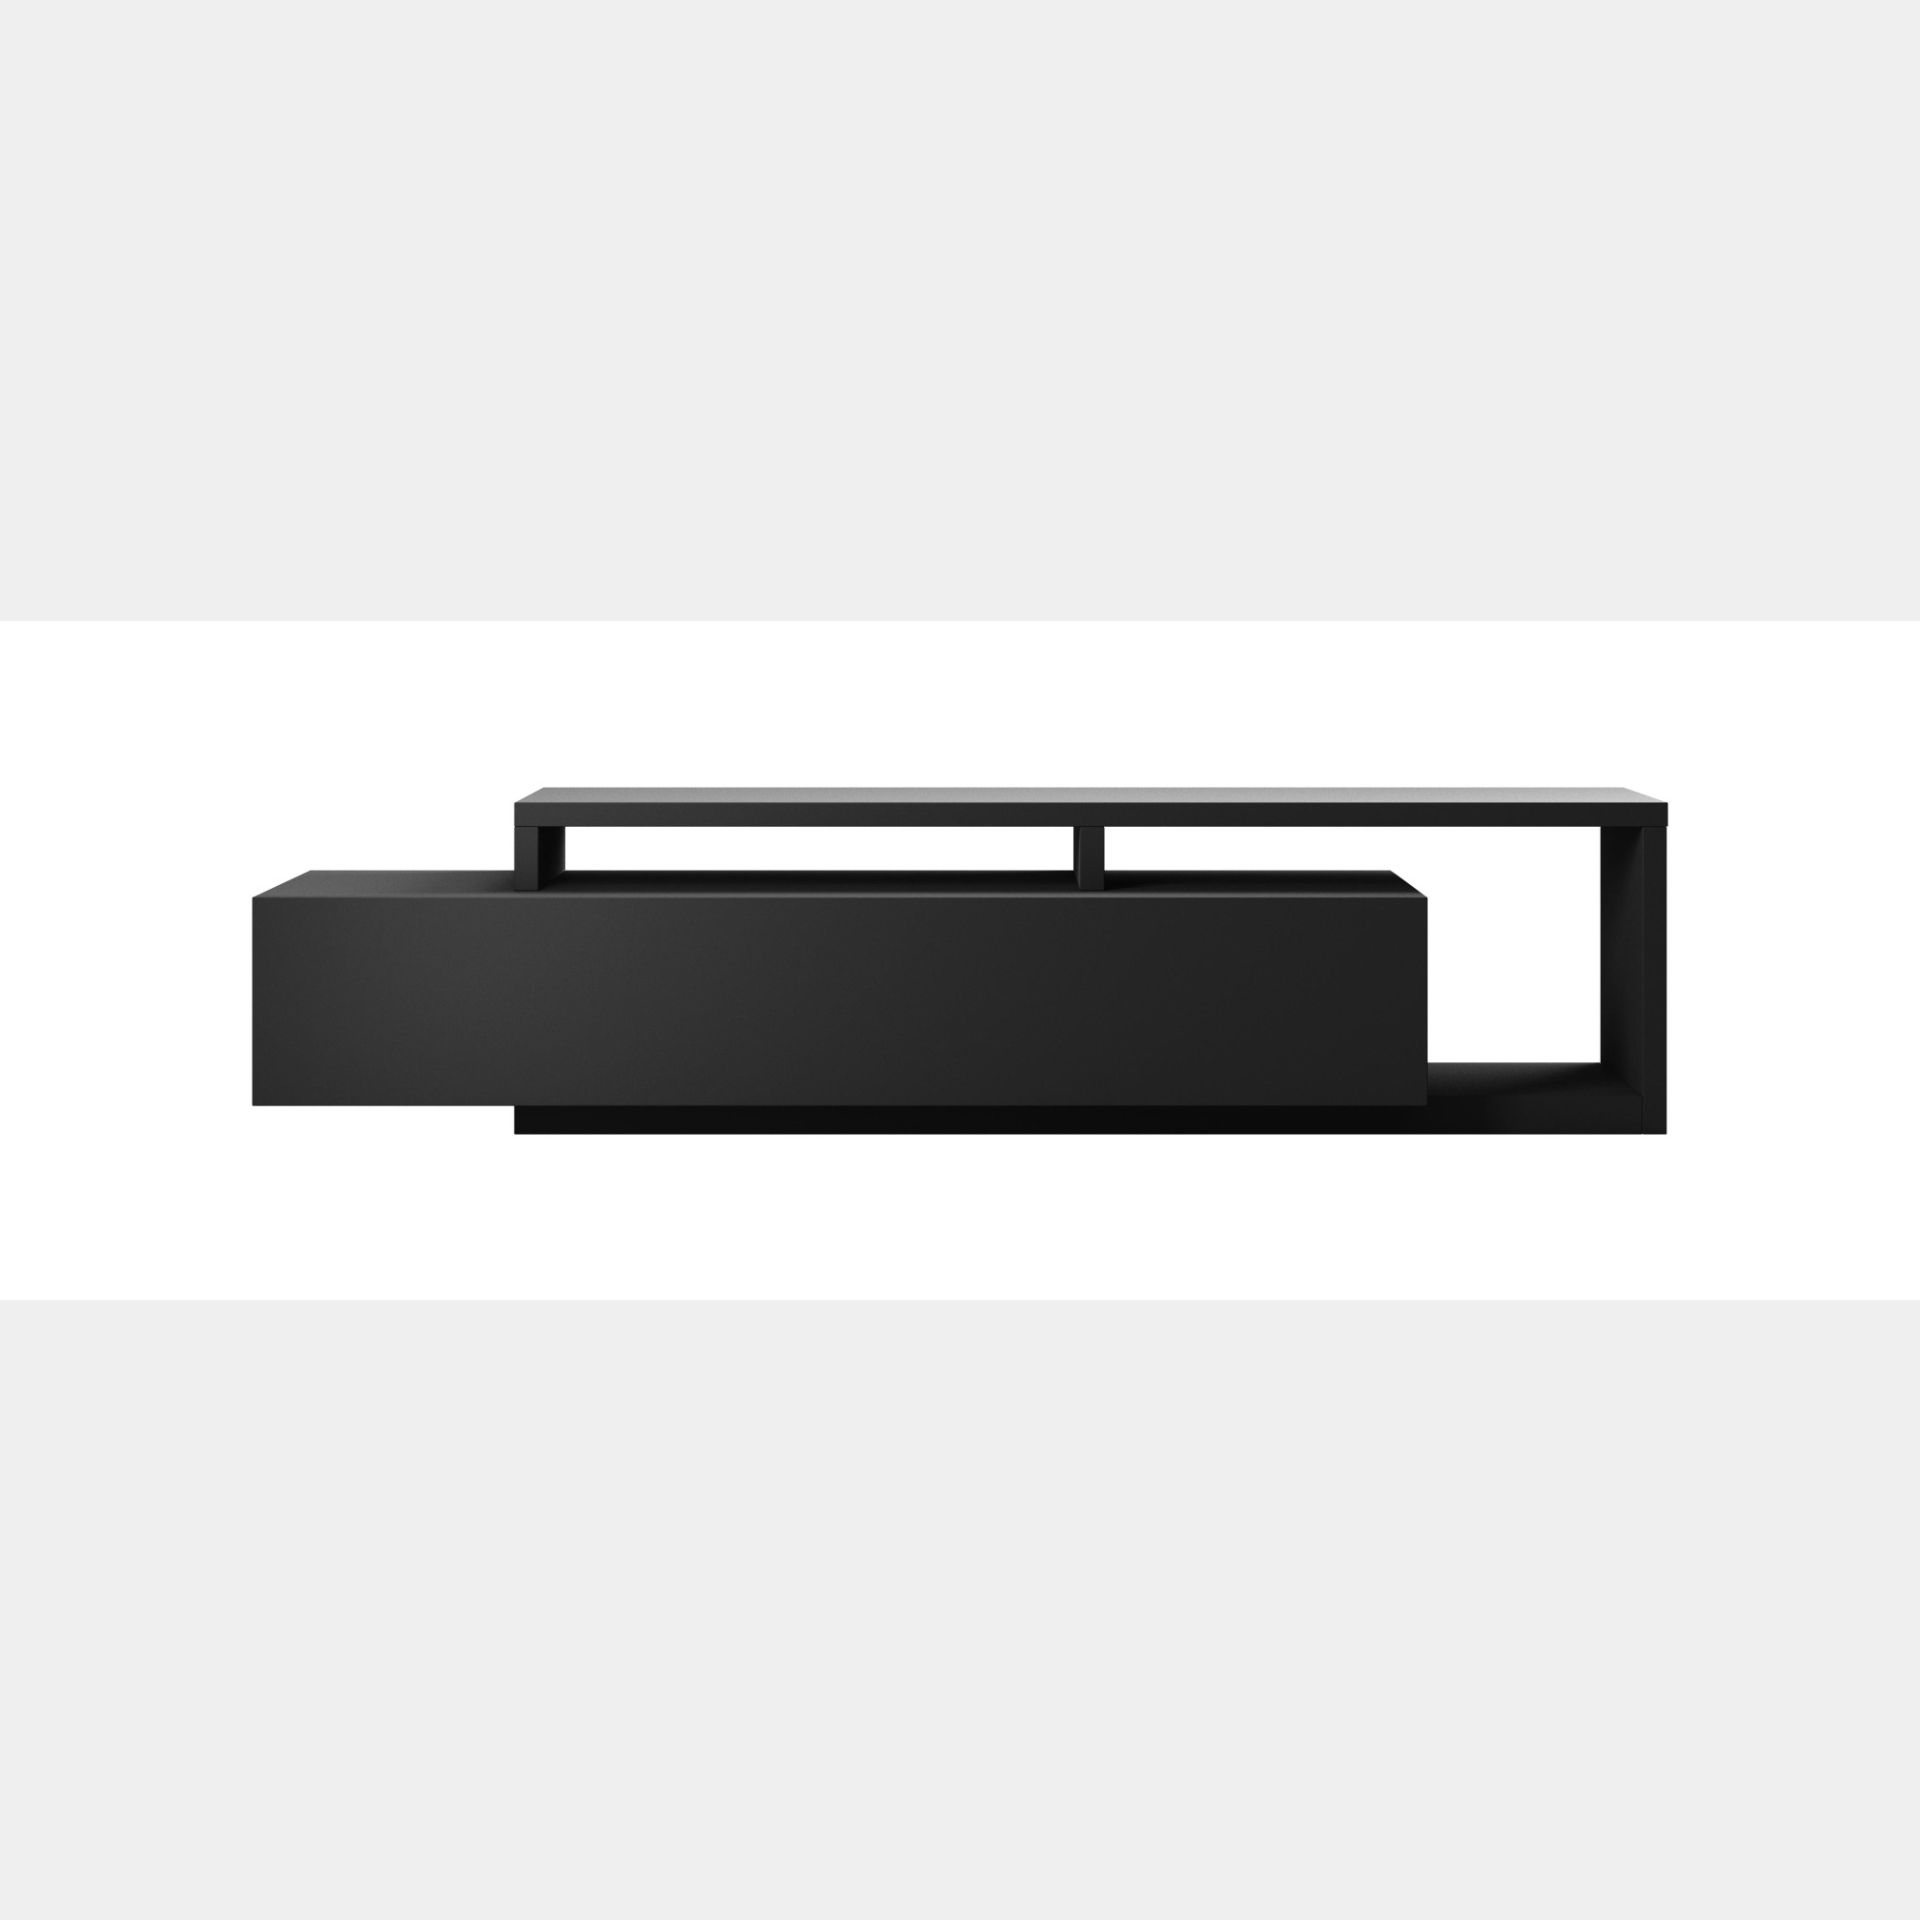 Porta TV design industrial 180x65cm quercia nero opaco Neive